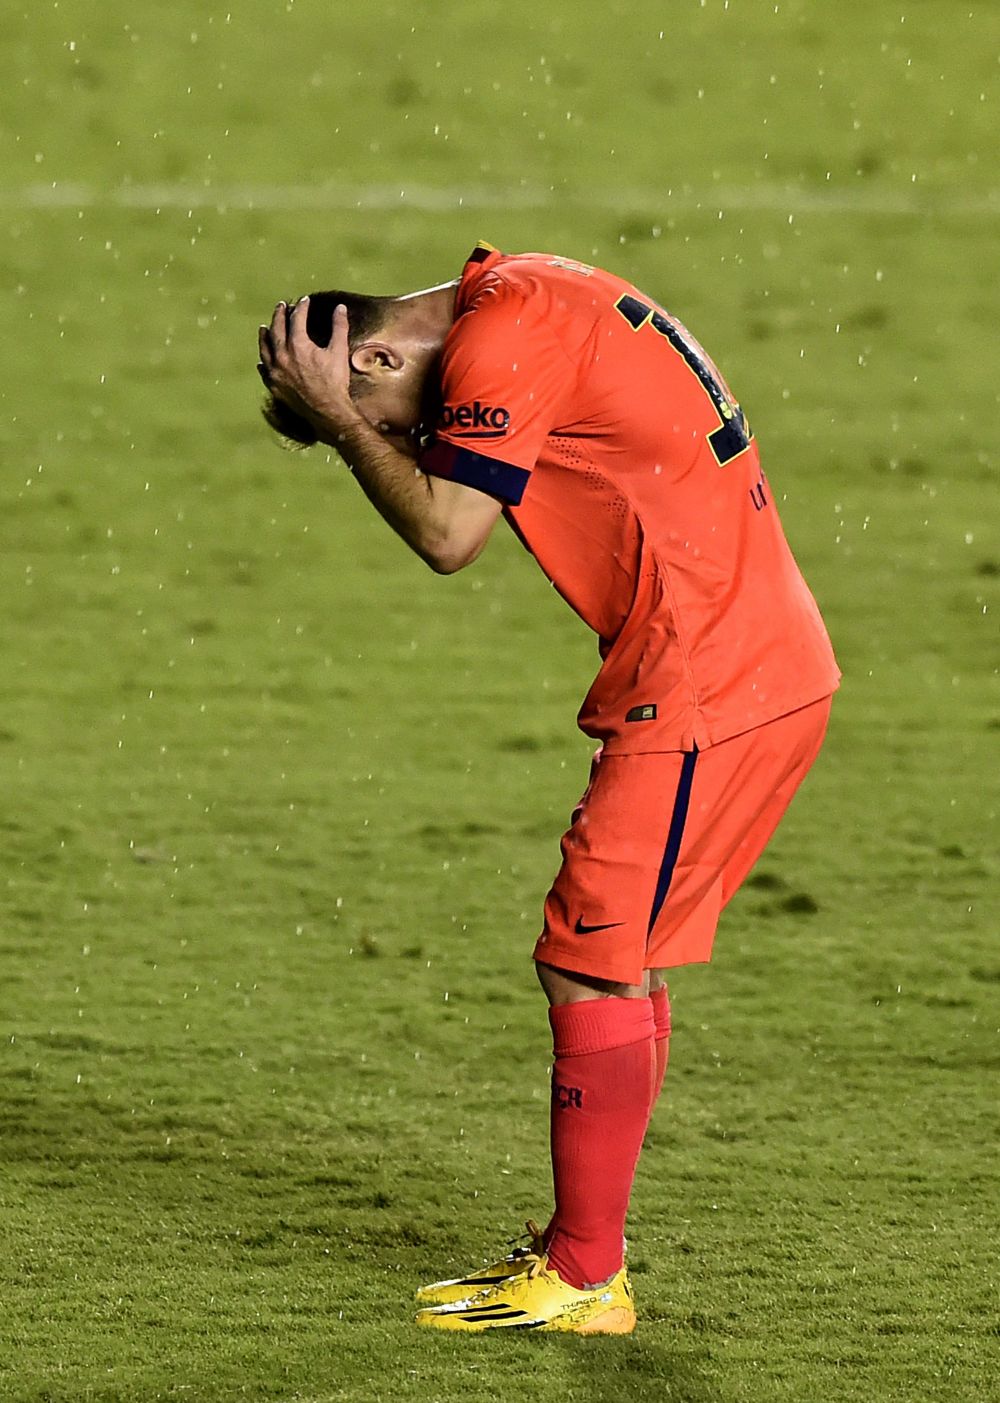 VIDEO Messi a ratat penalty cu Levante! Record INCREDIBIL: a ratat de 11 ori in cariera! "Esti mai rau ca mine, amice!"_2